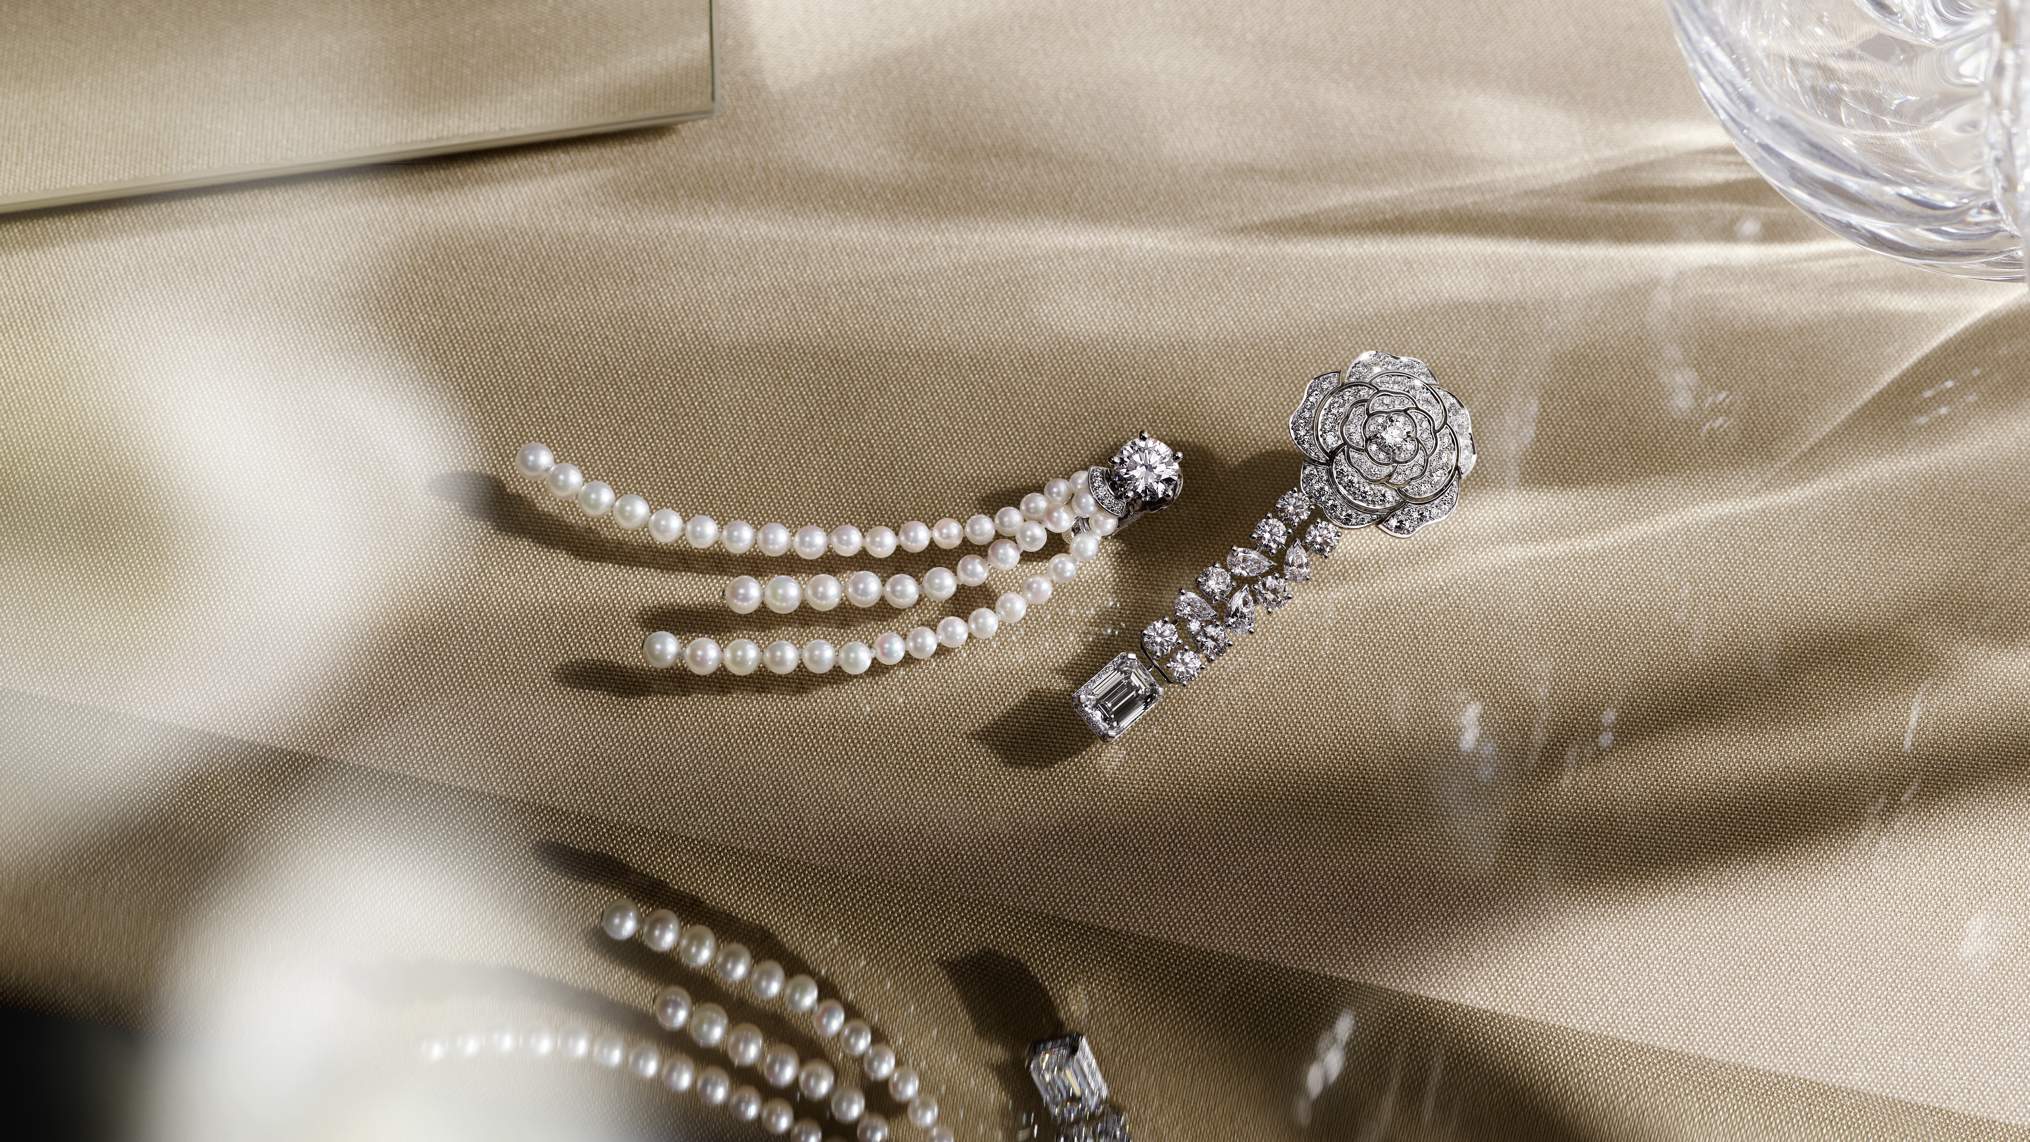 Chanel's Extrait de Camélia collection gets two new styles